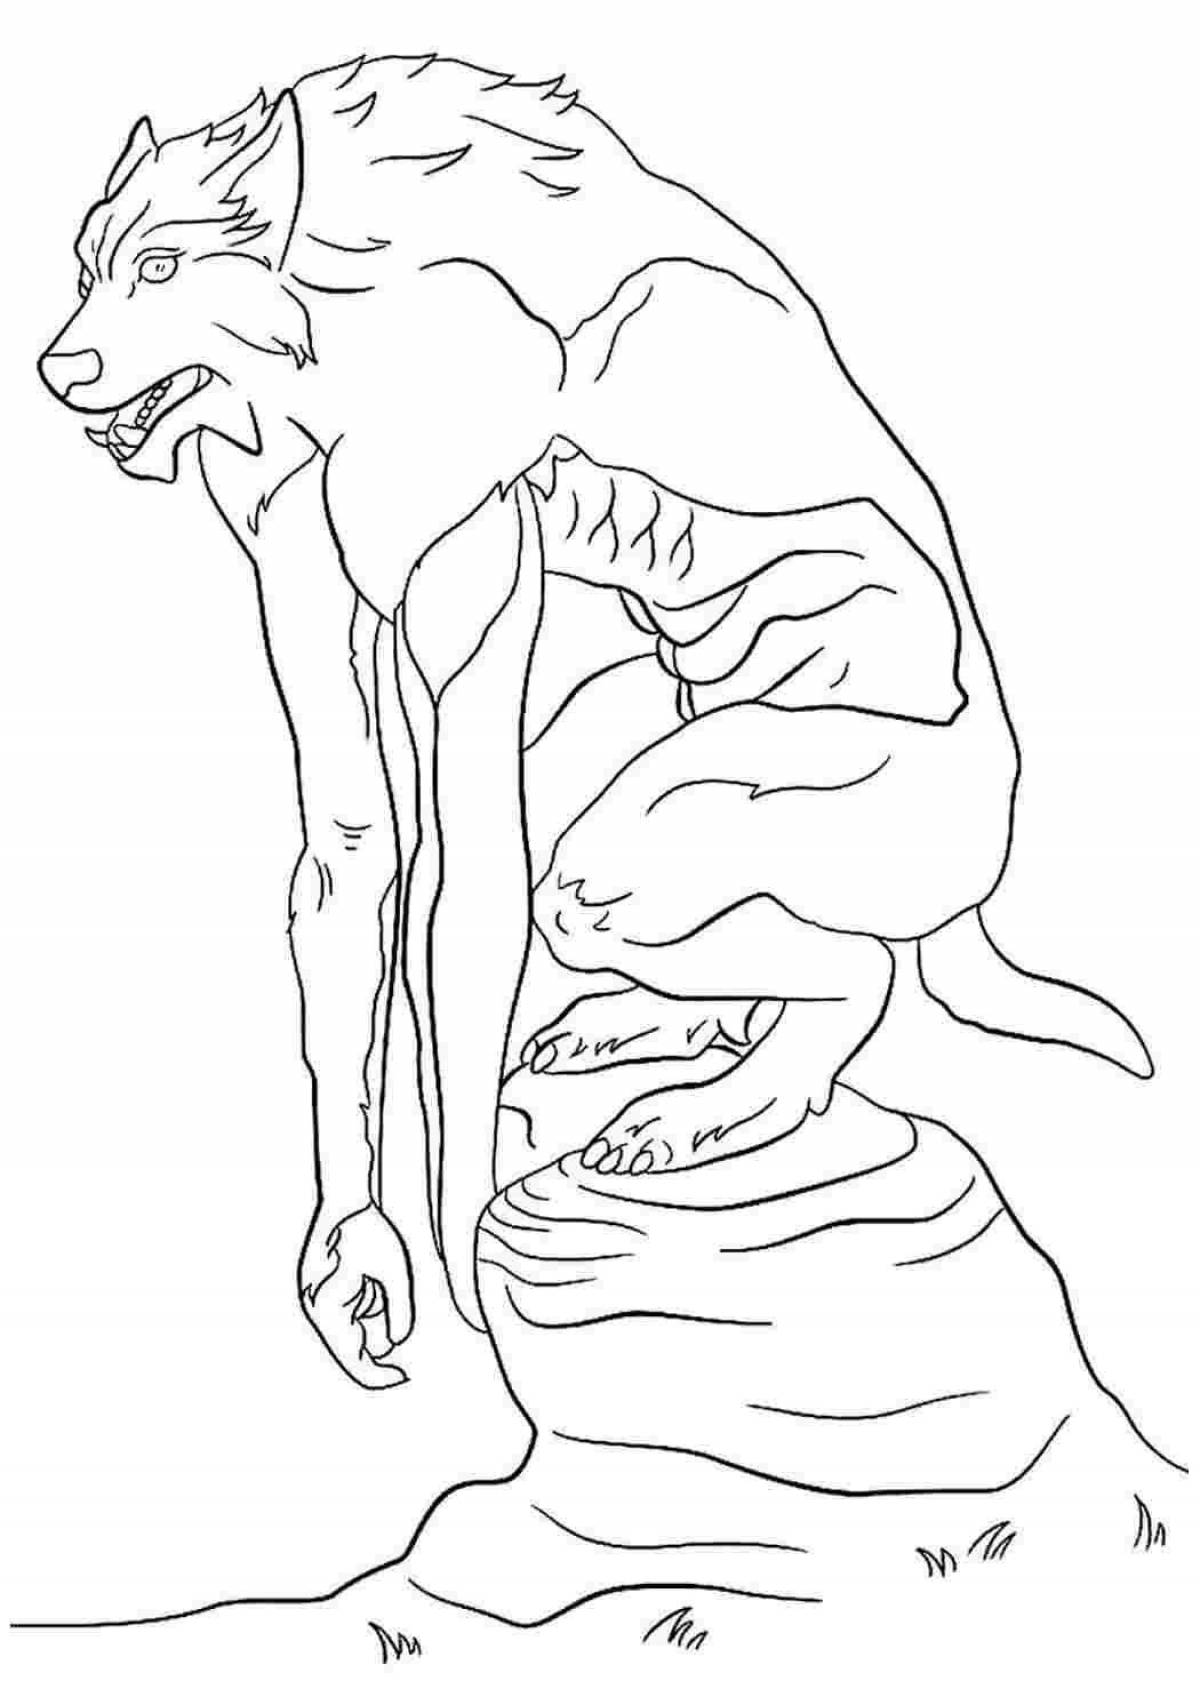 Grim werewolf coloring book for kids